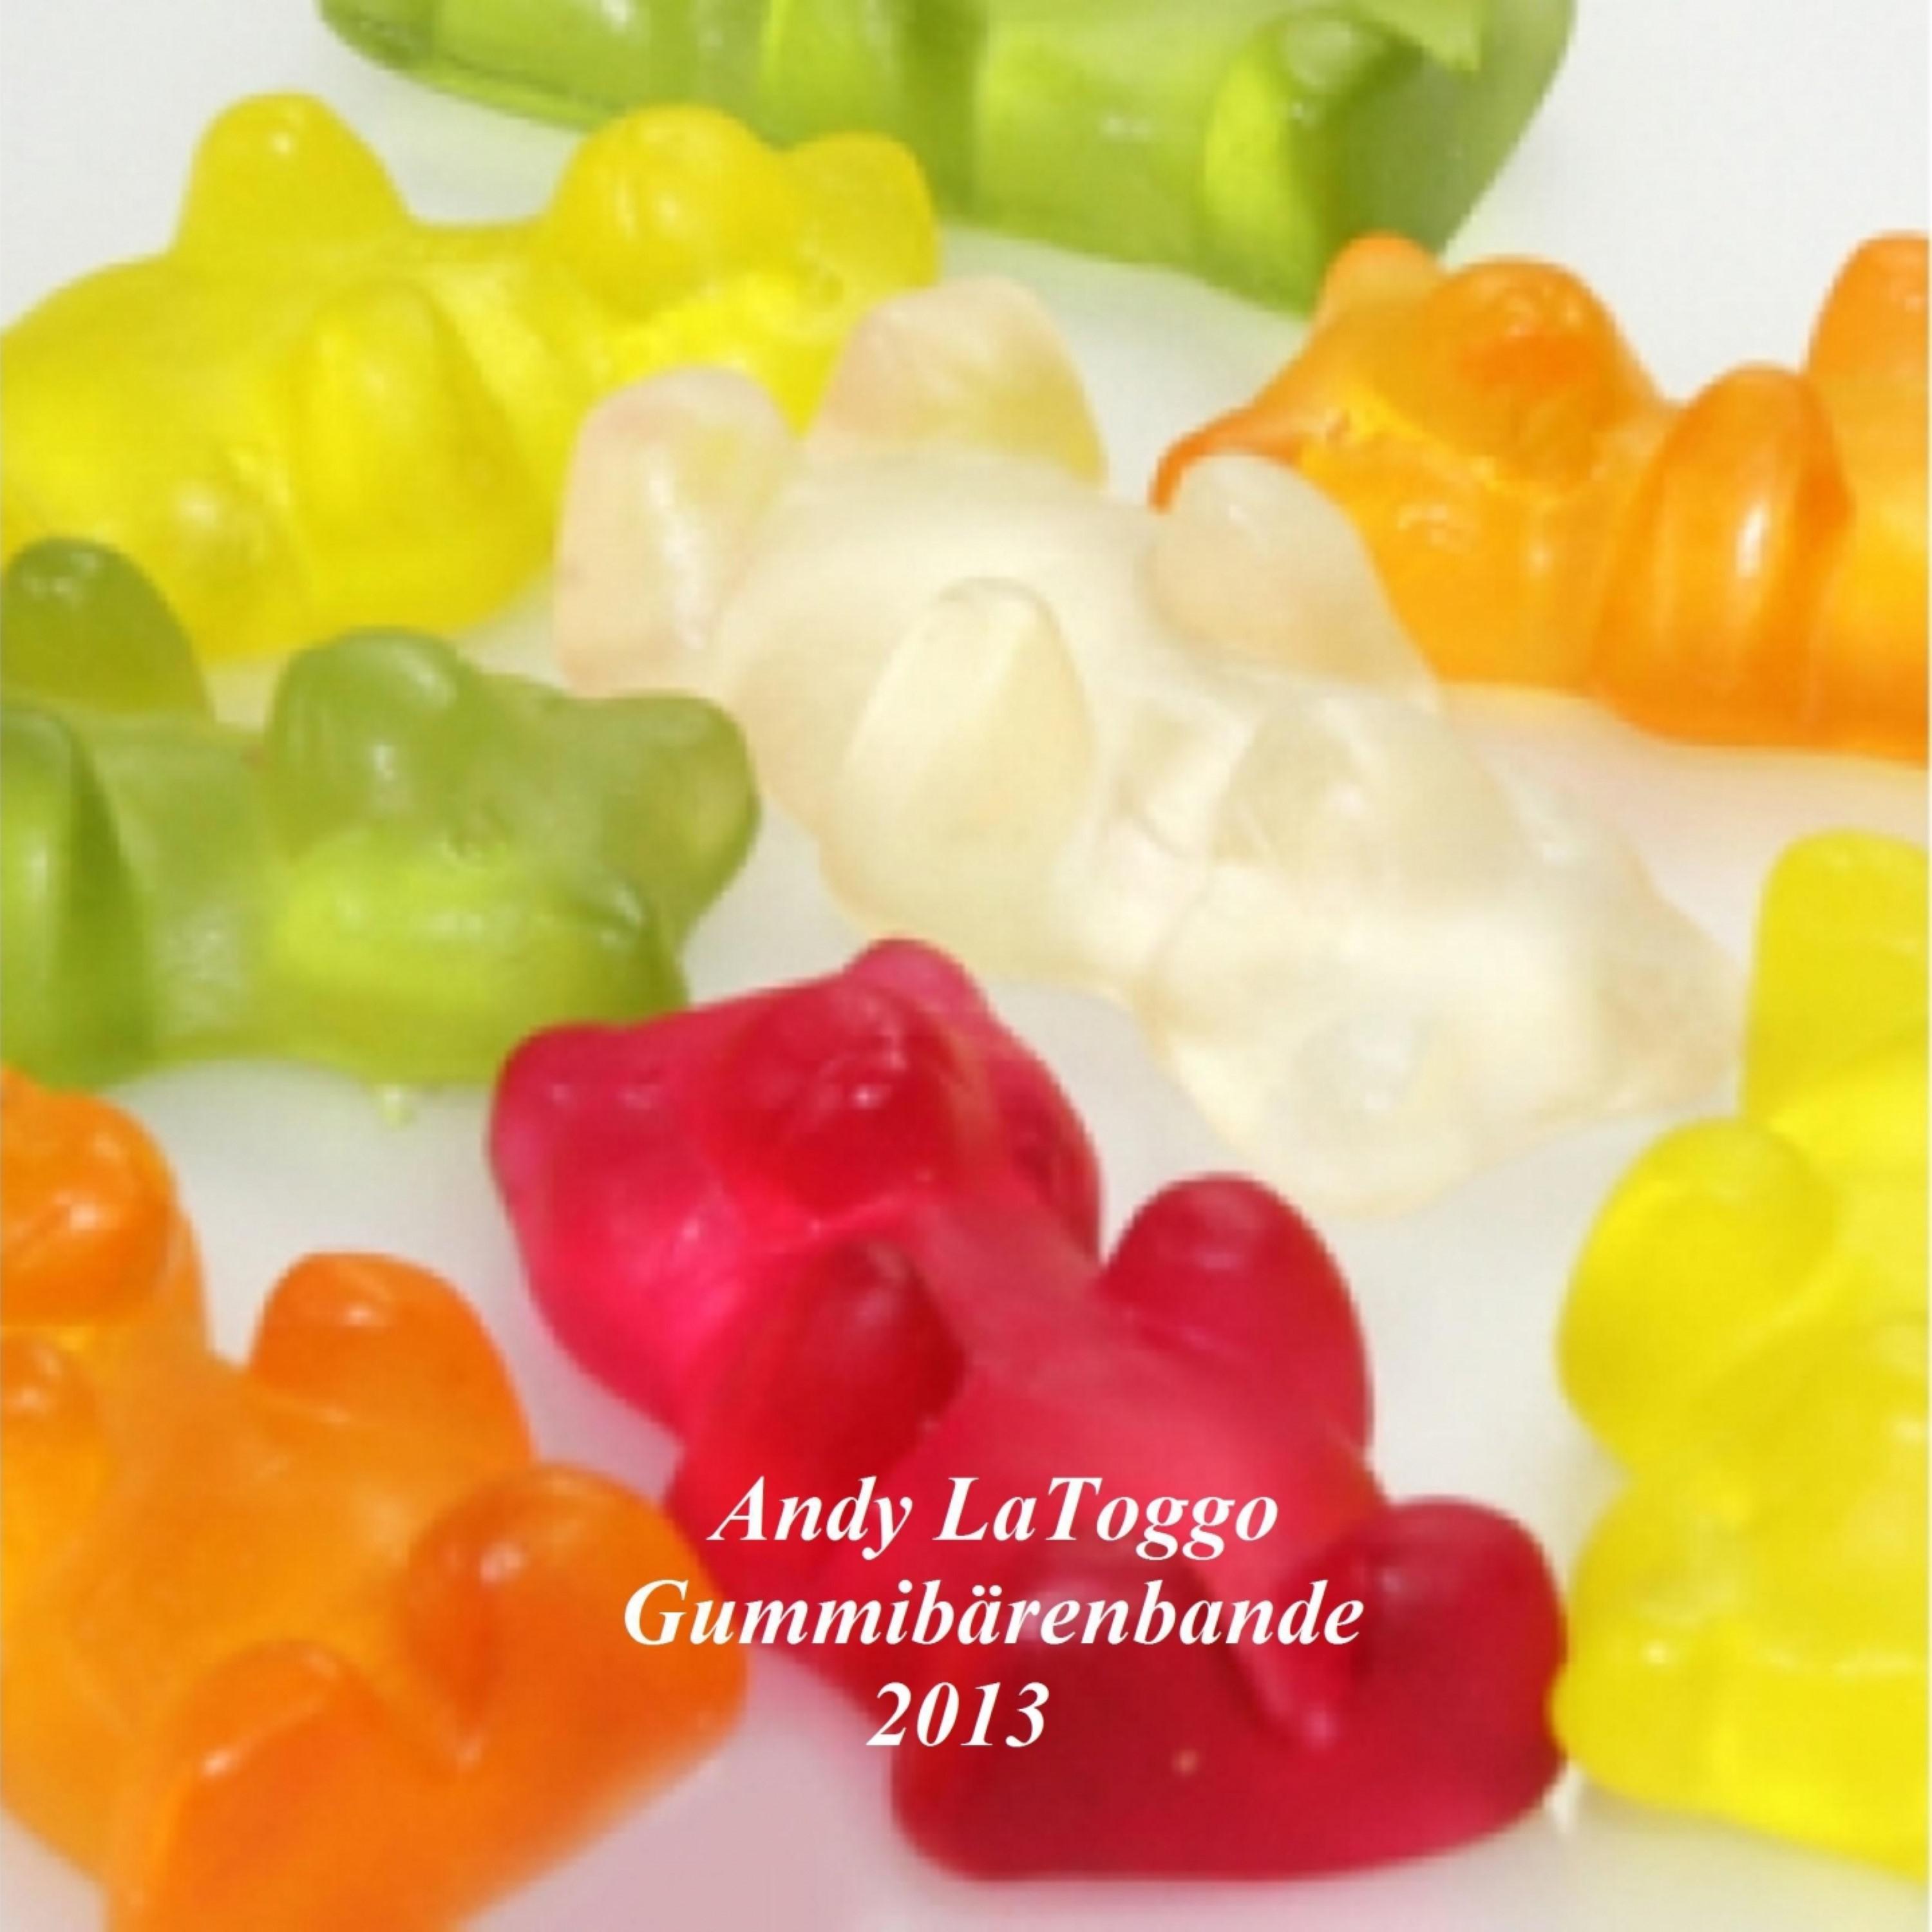 Andy LaToggo - Gummibärenbande 2013 (Kenny Laakkinen Remix)